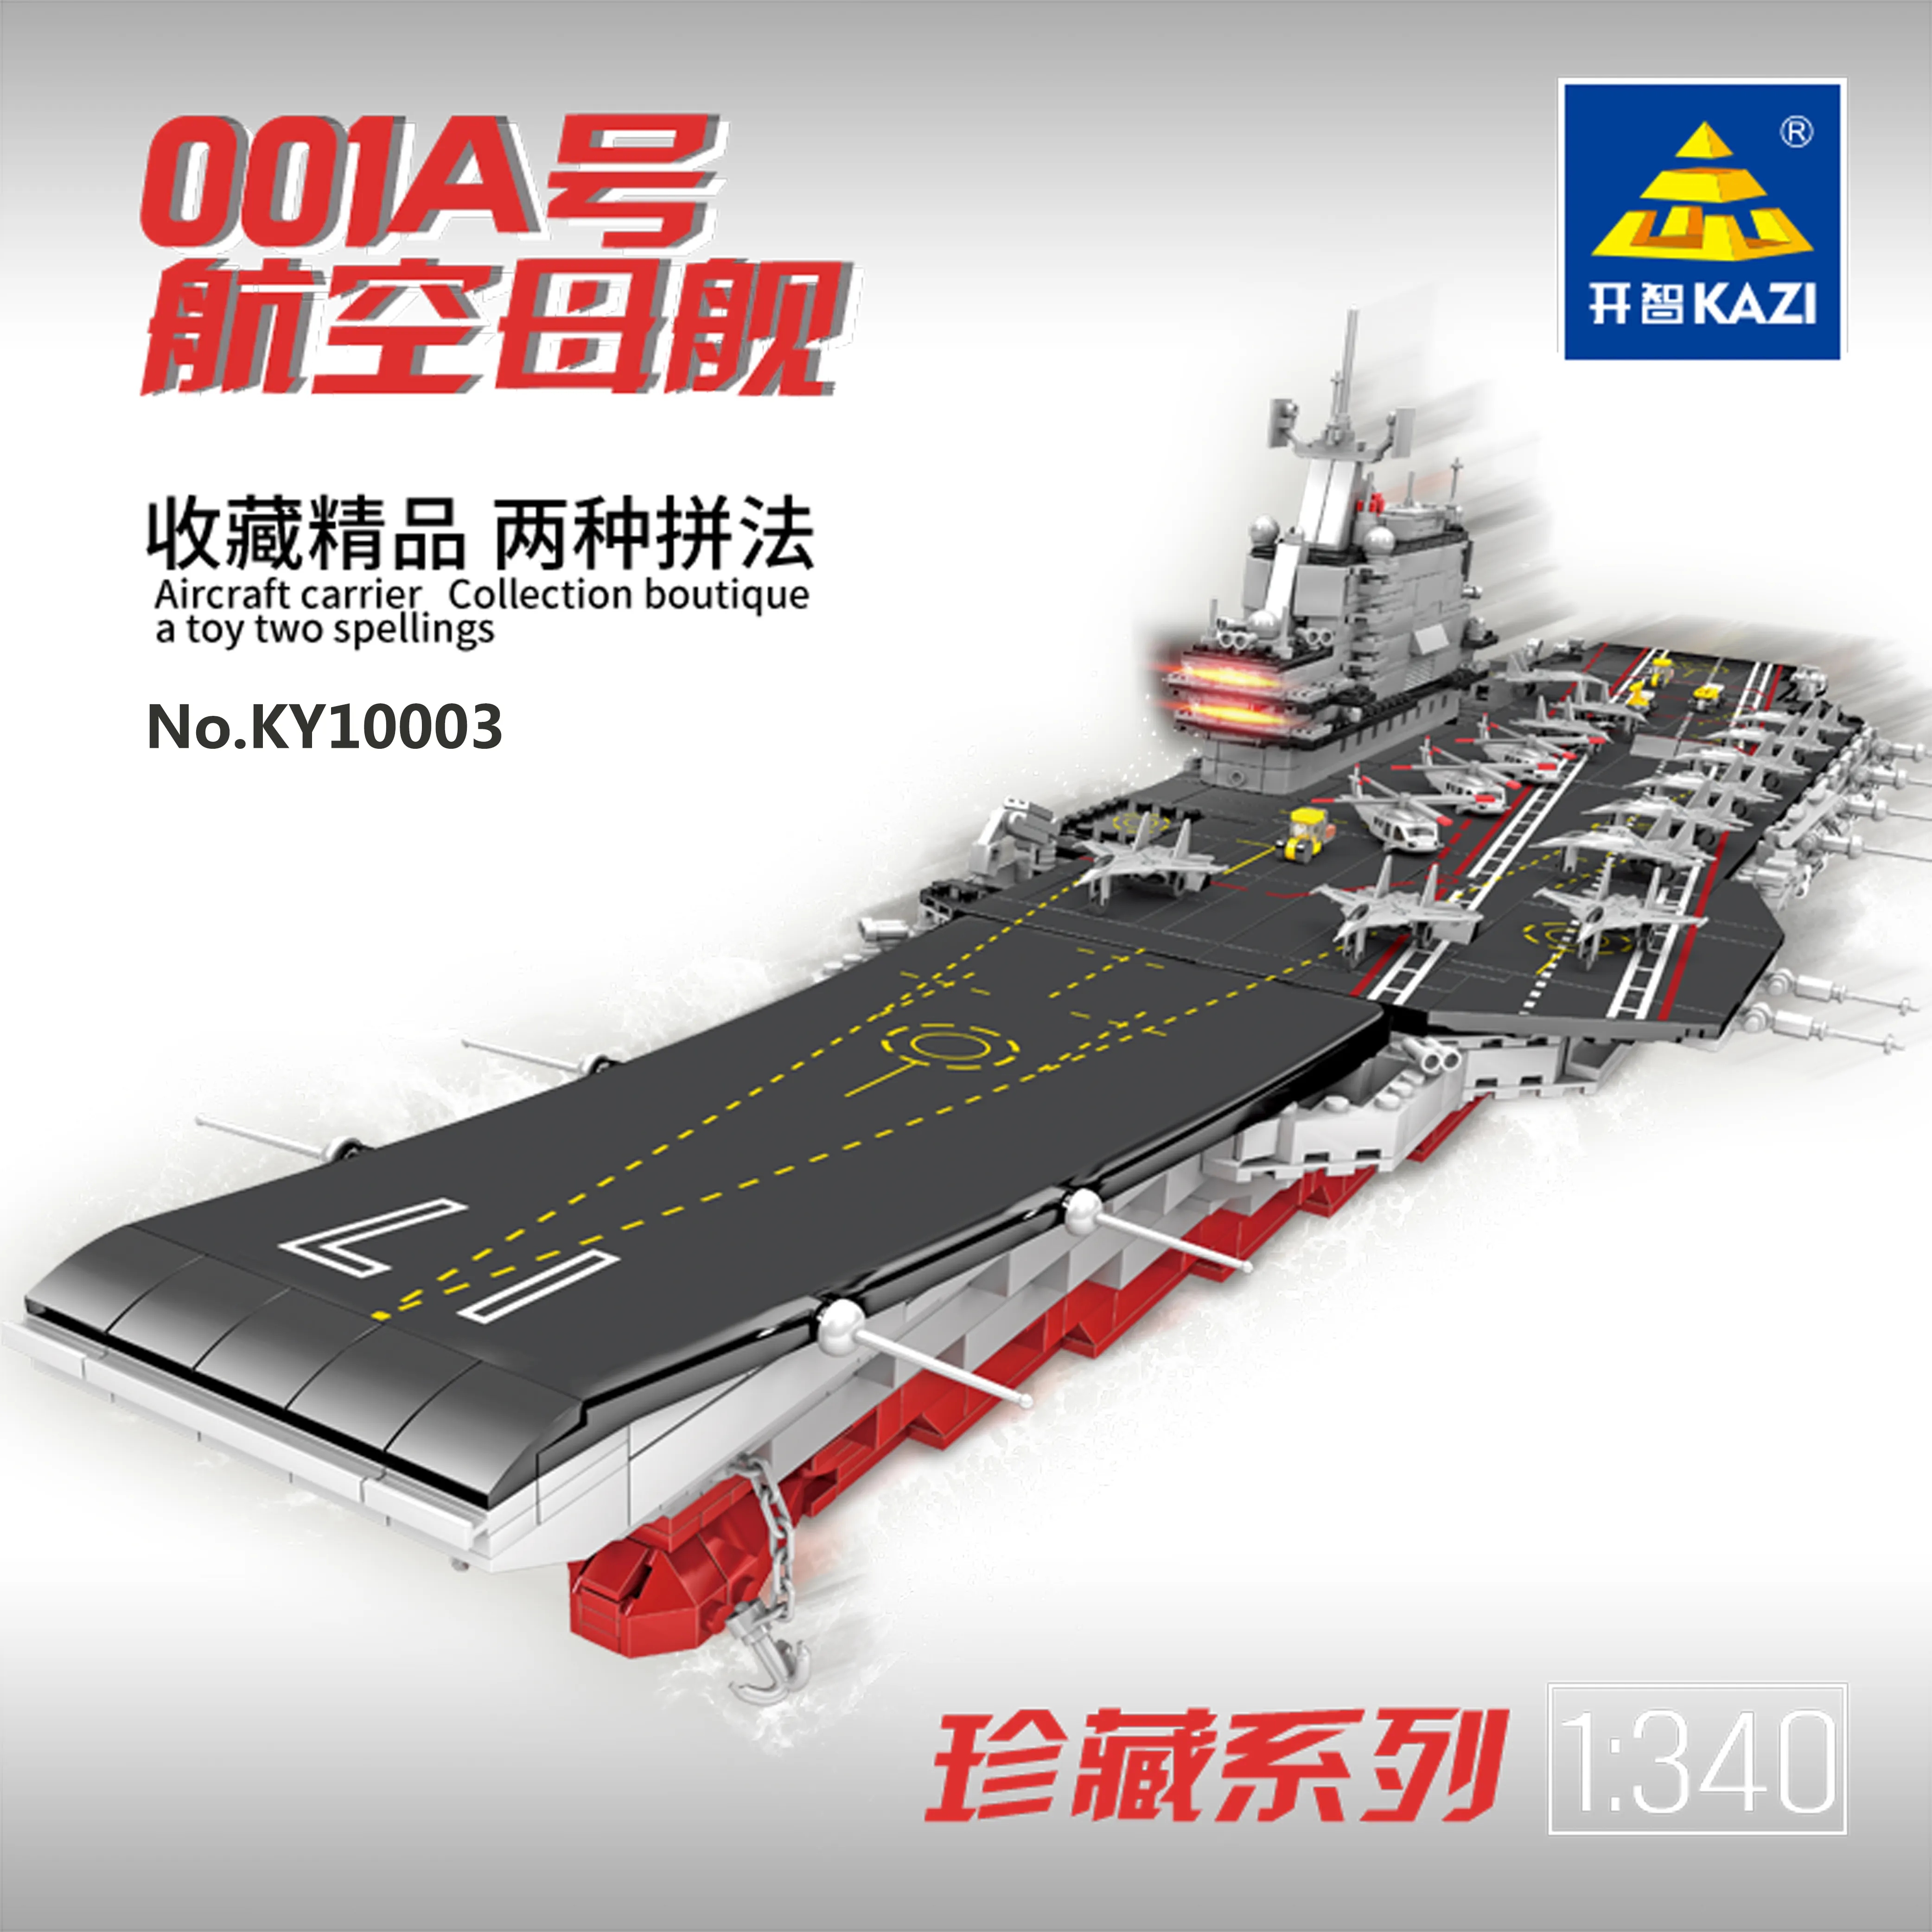 KAZI collection series ky10003 1:340 aircraft carrier building blocks military toys plastic bricks